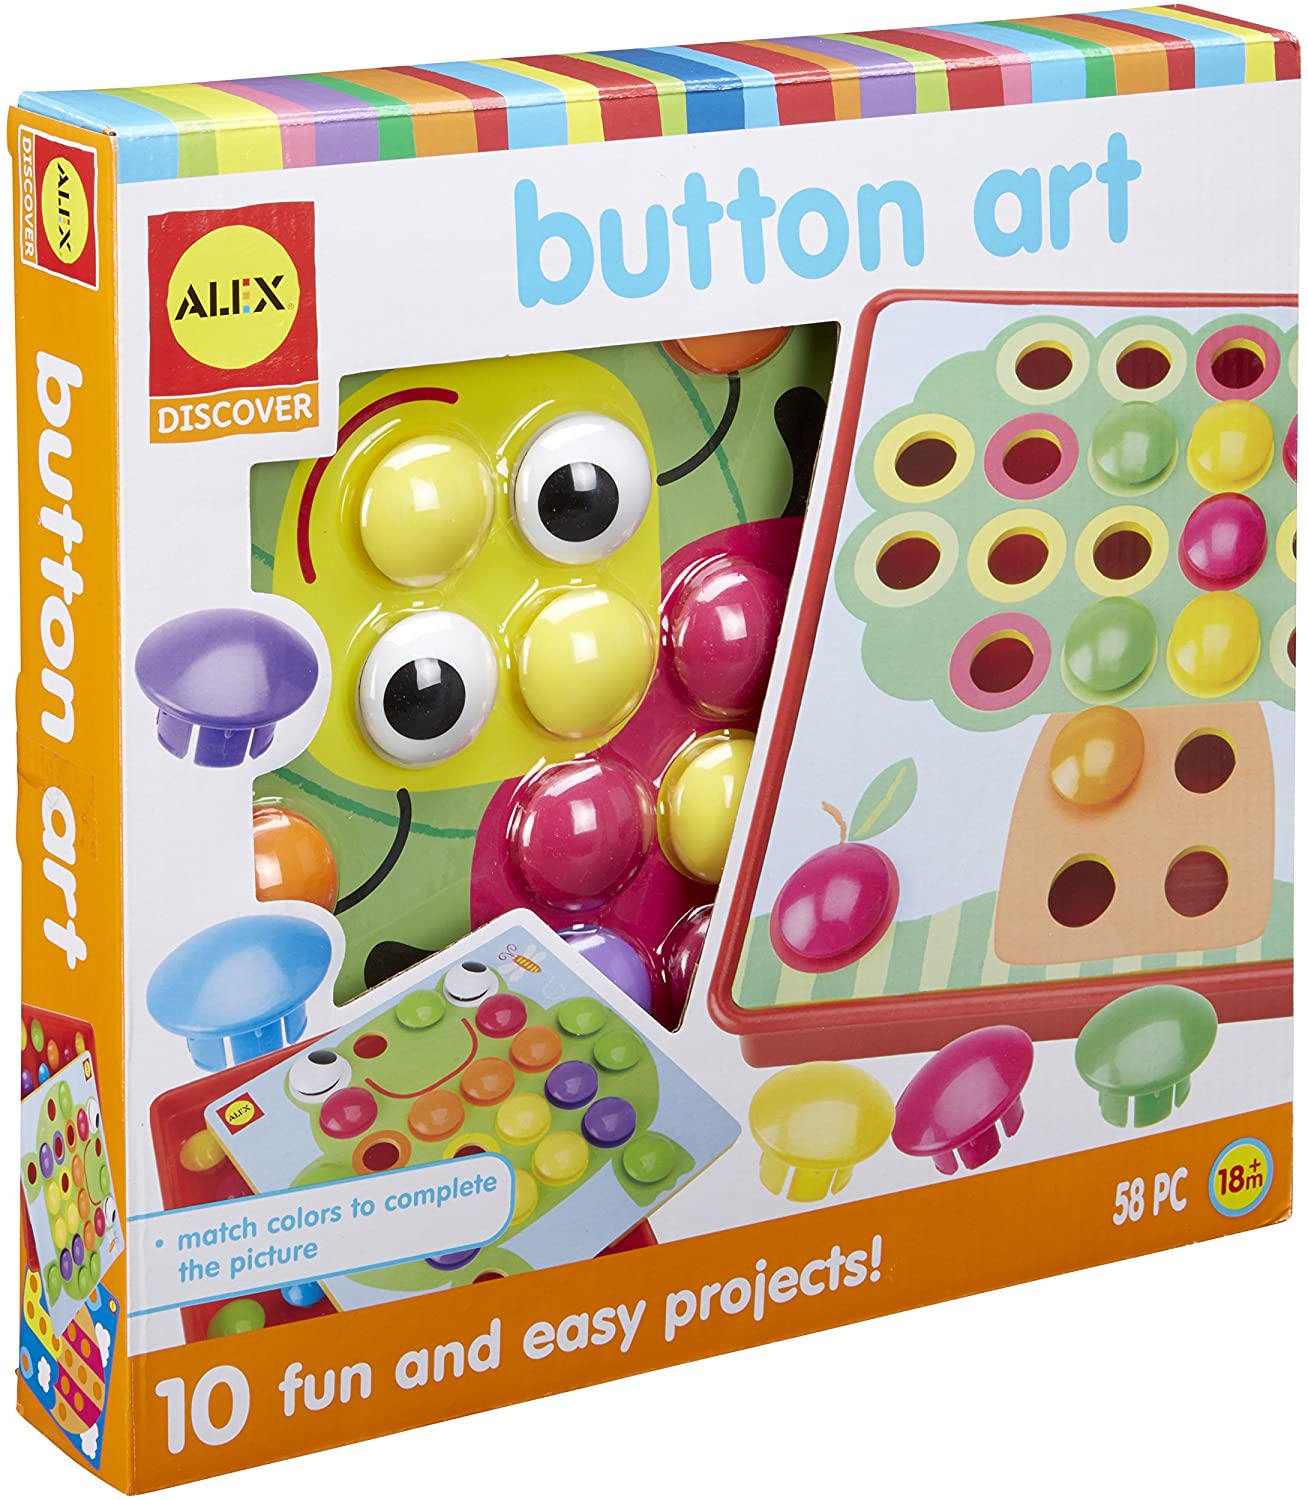 Alex Discover Button Art Activity Set Kids Art and Craft Activity